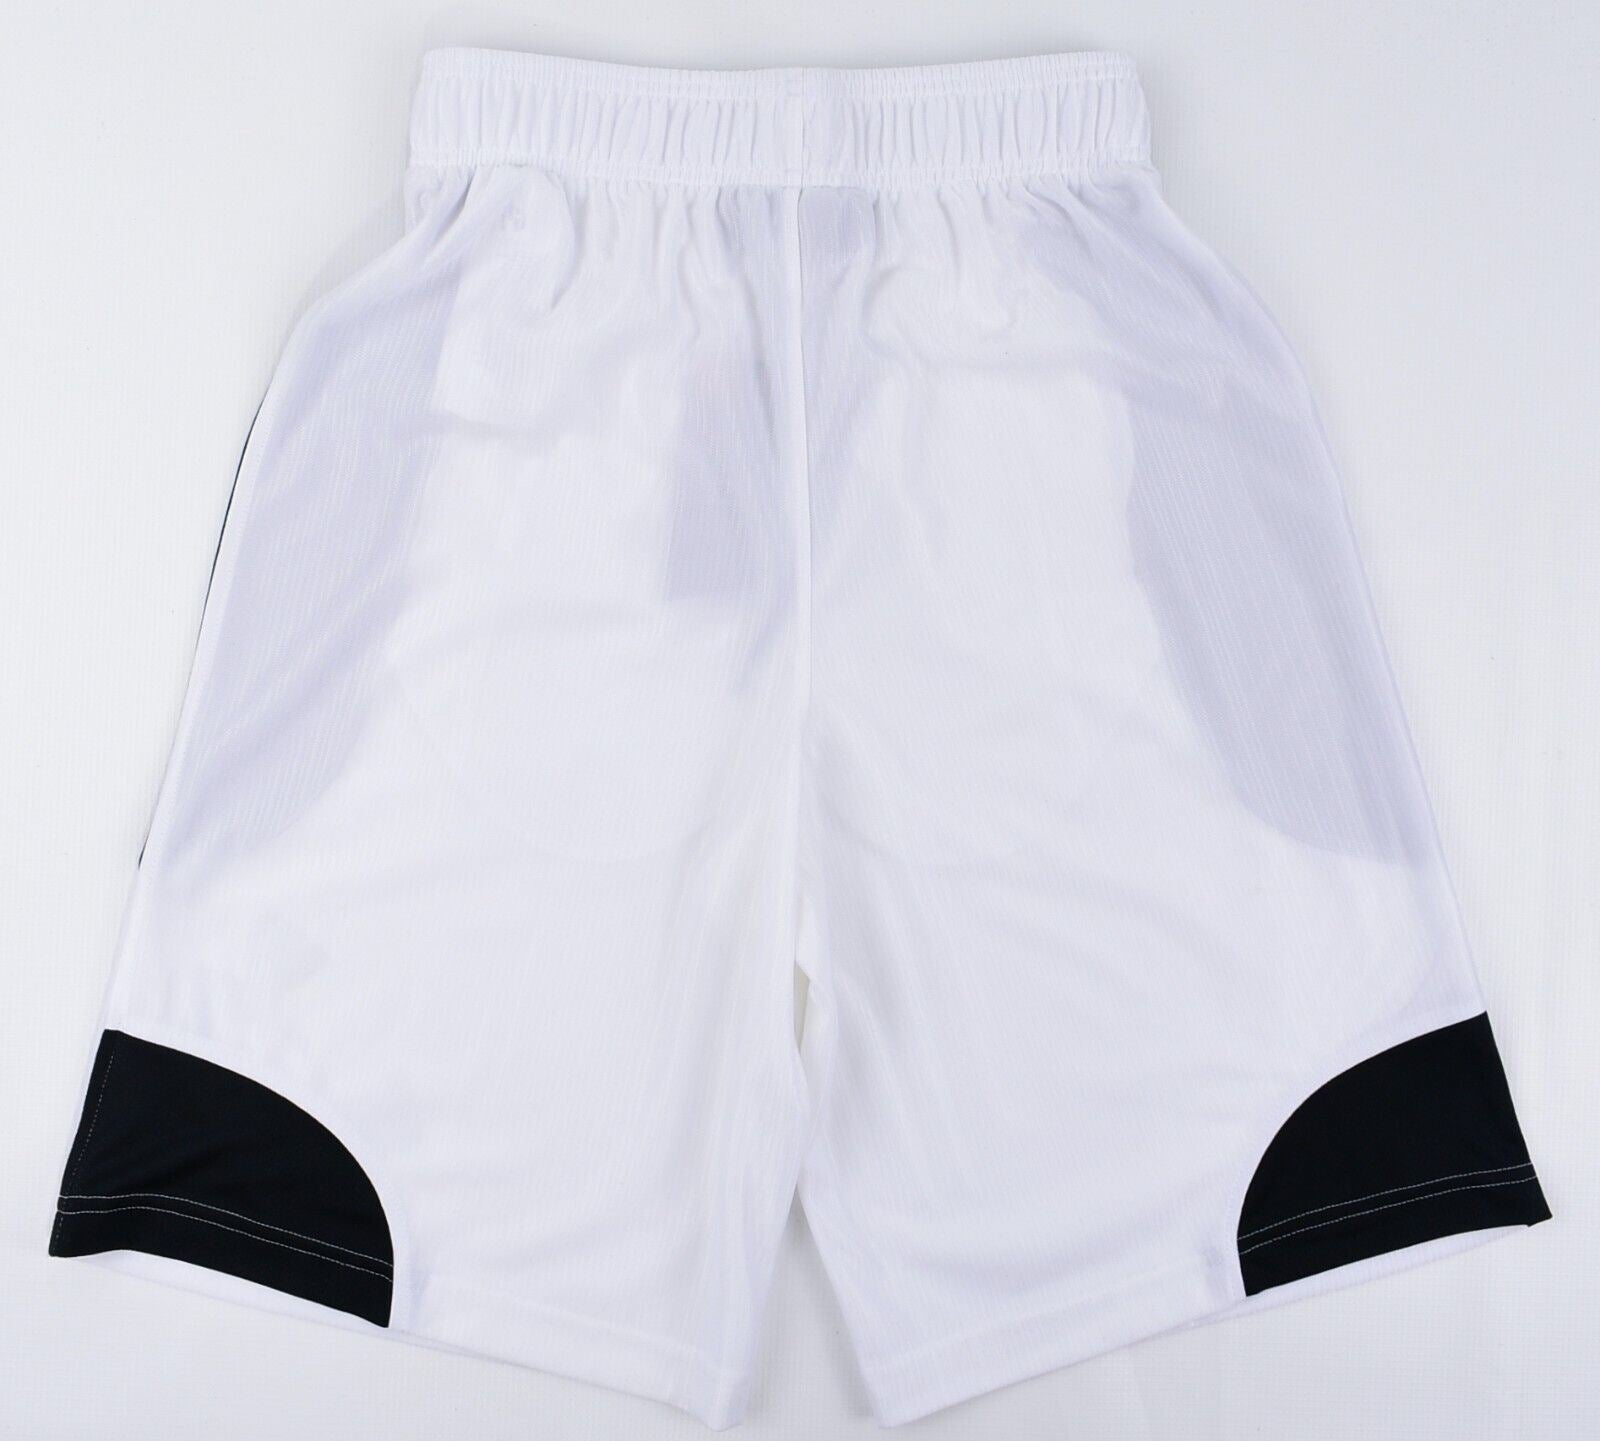 UNDER ARMOUR Men's HeatGear Perimeter Loose Fit Shorts, White/Black, size SMALL